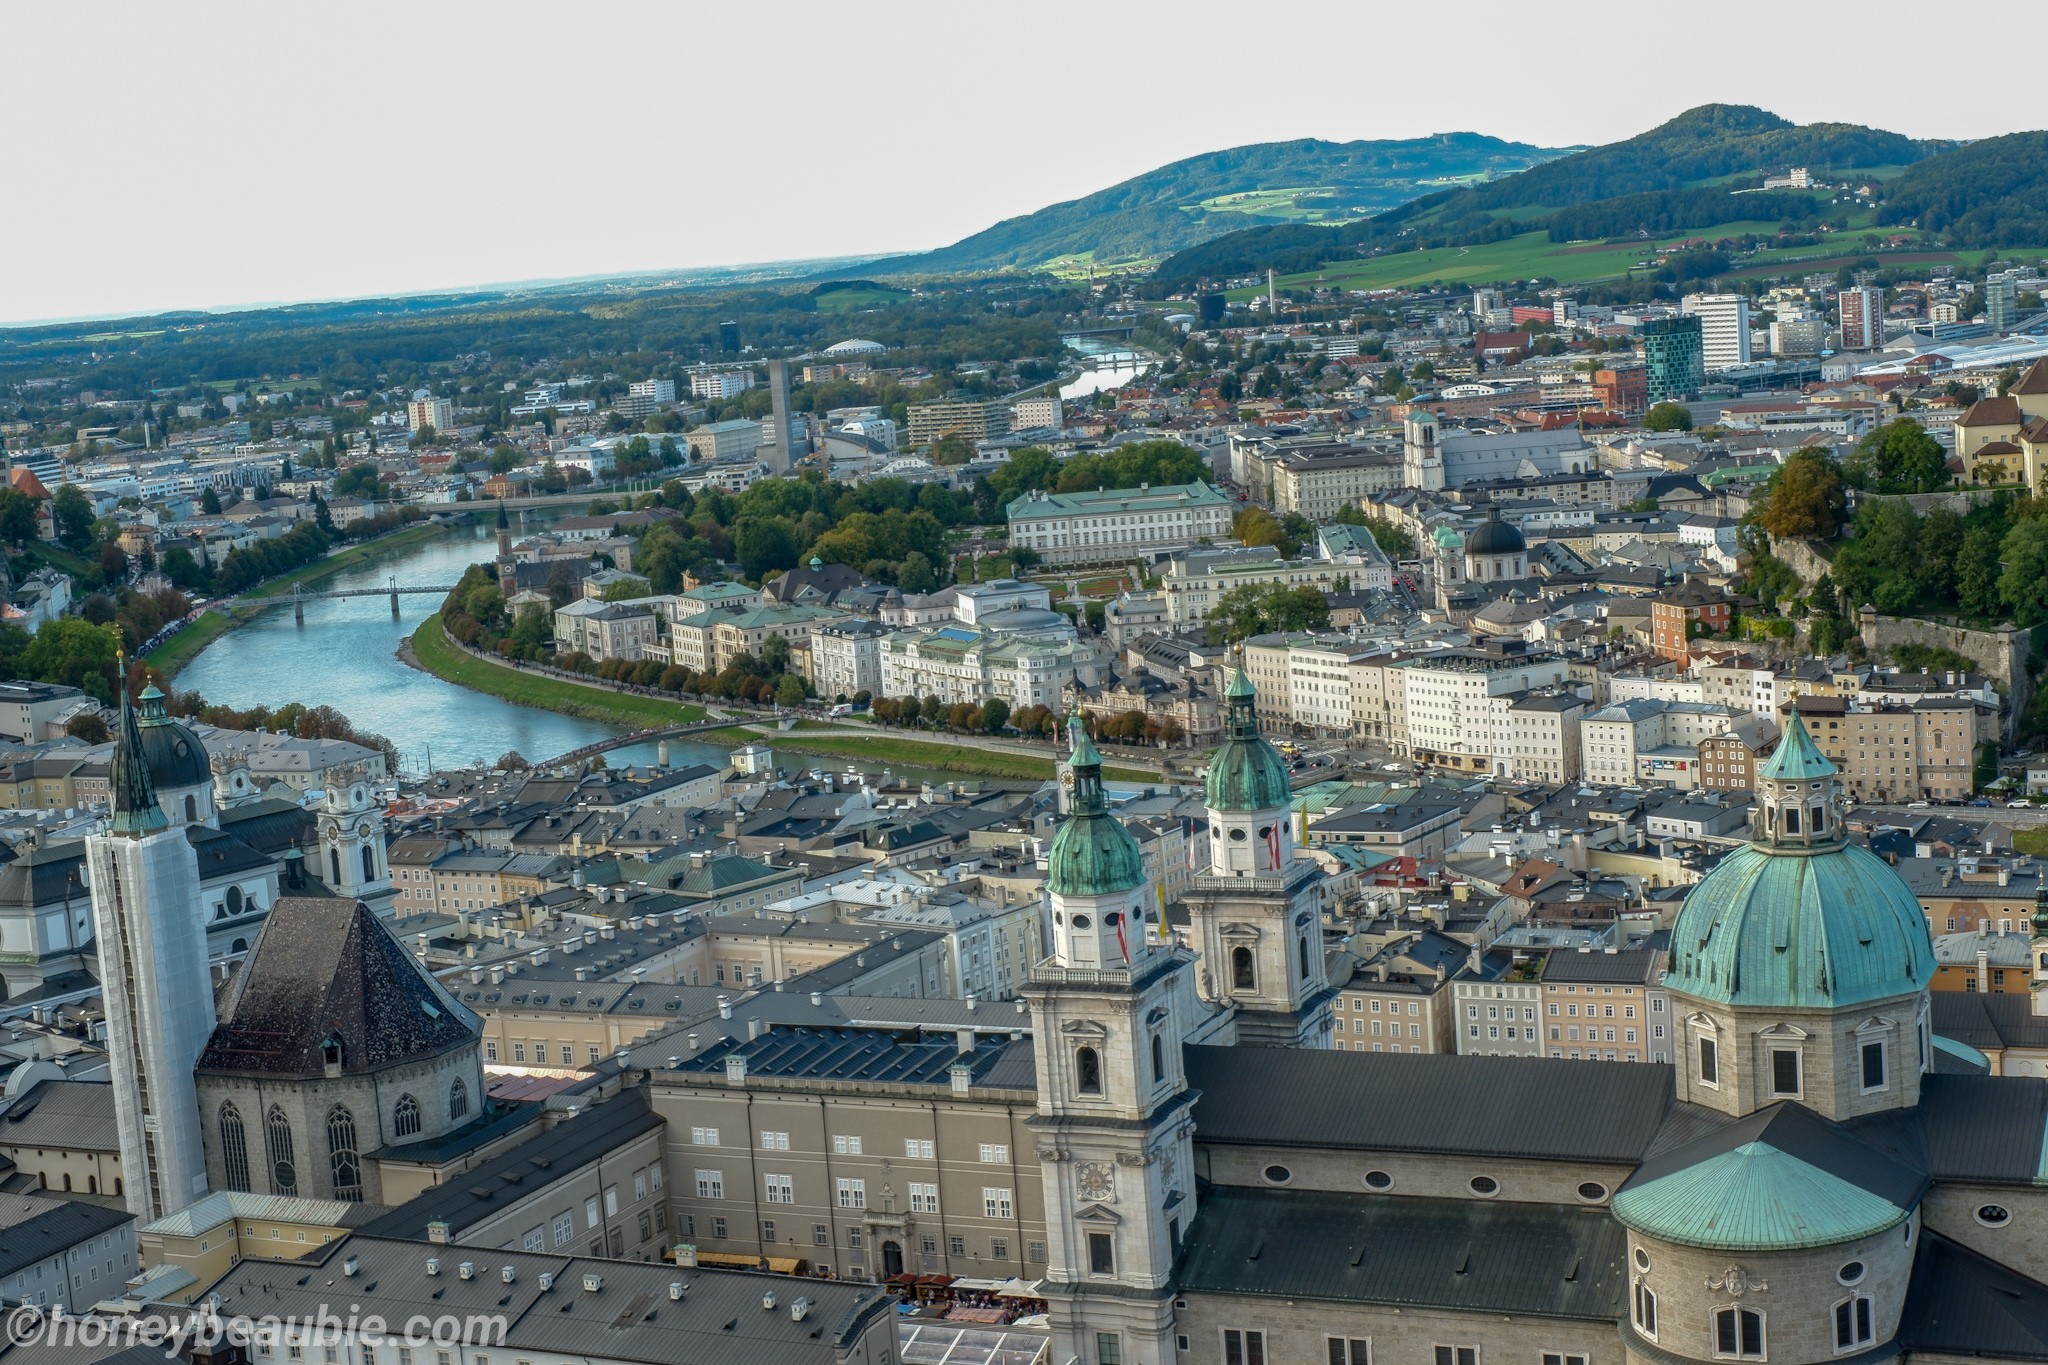 Landscape view of Salzburg City taken from the Hohensalzburg Fortress